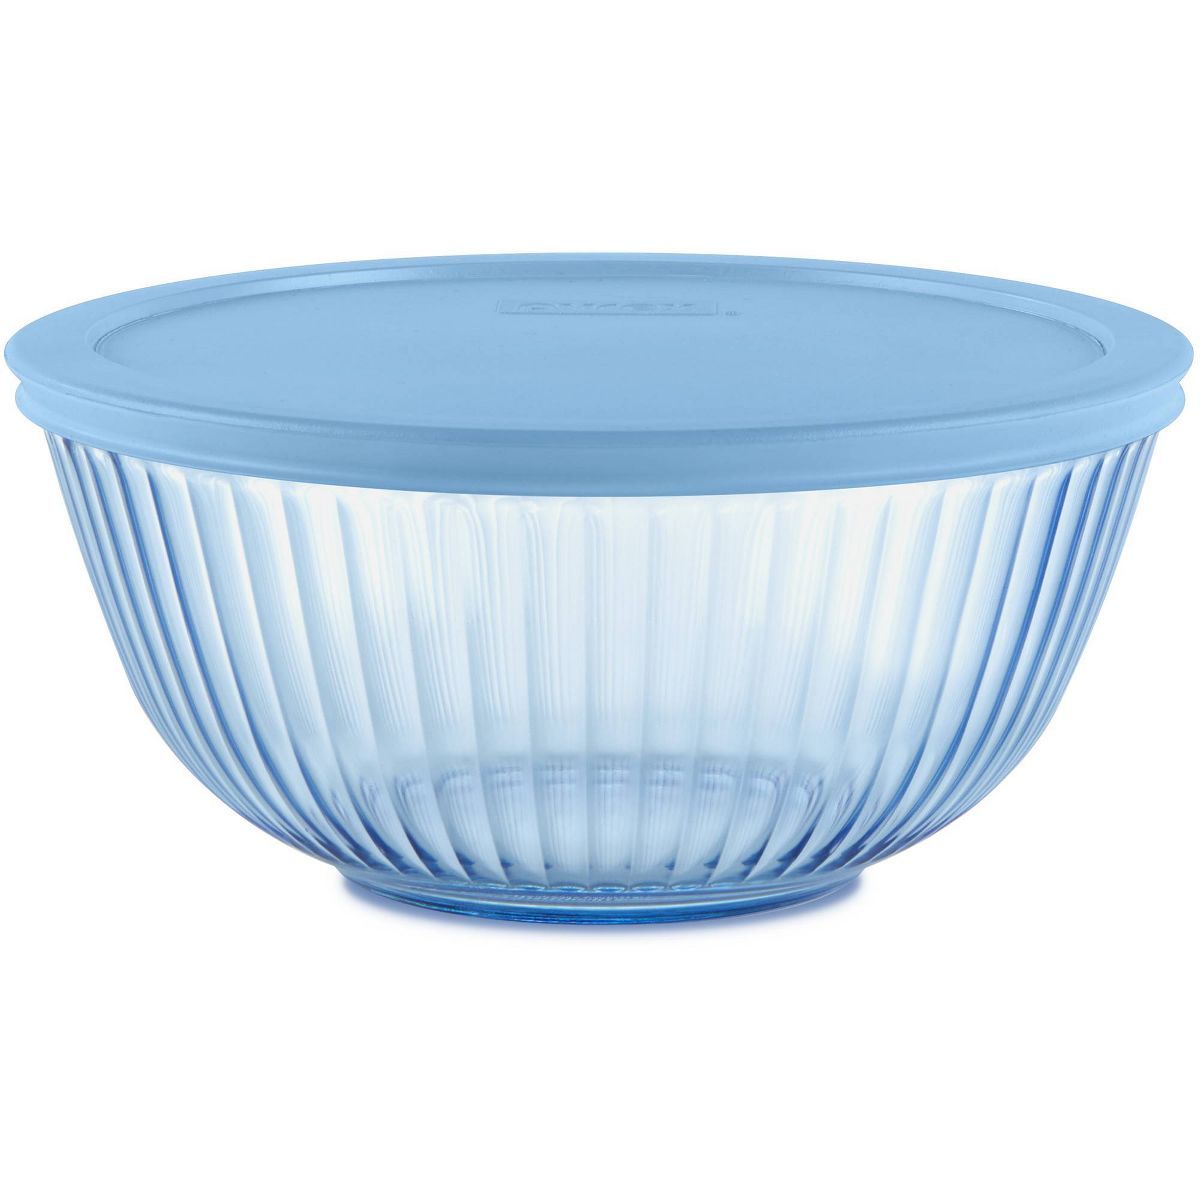 Pyrex 2.3qt Round Glass Open Baking Dish Bowl Blue | Target